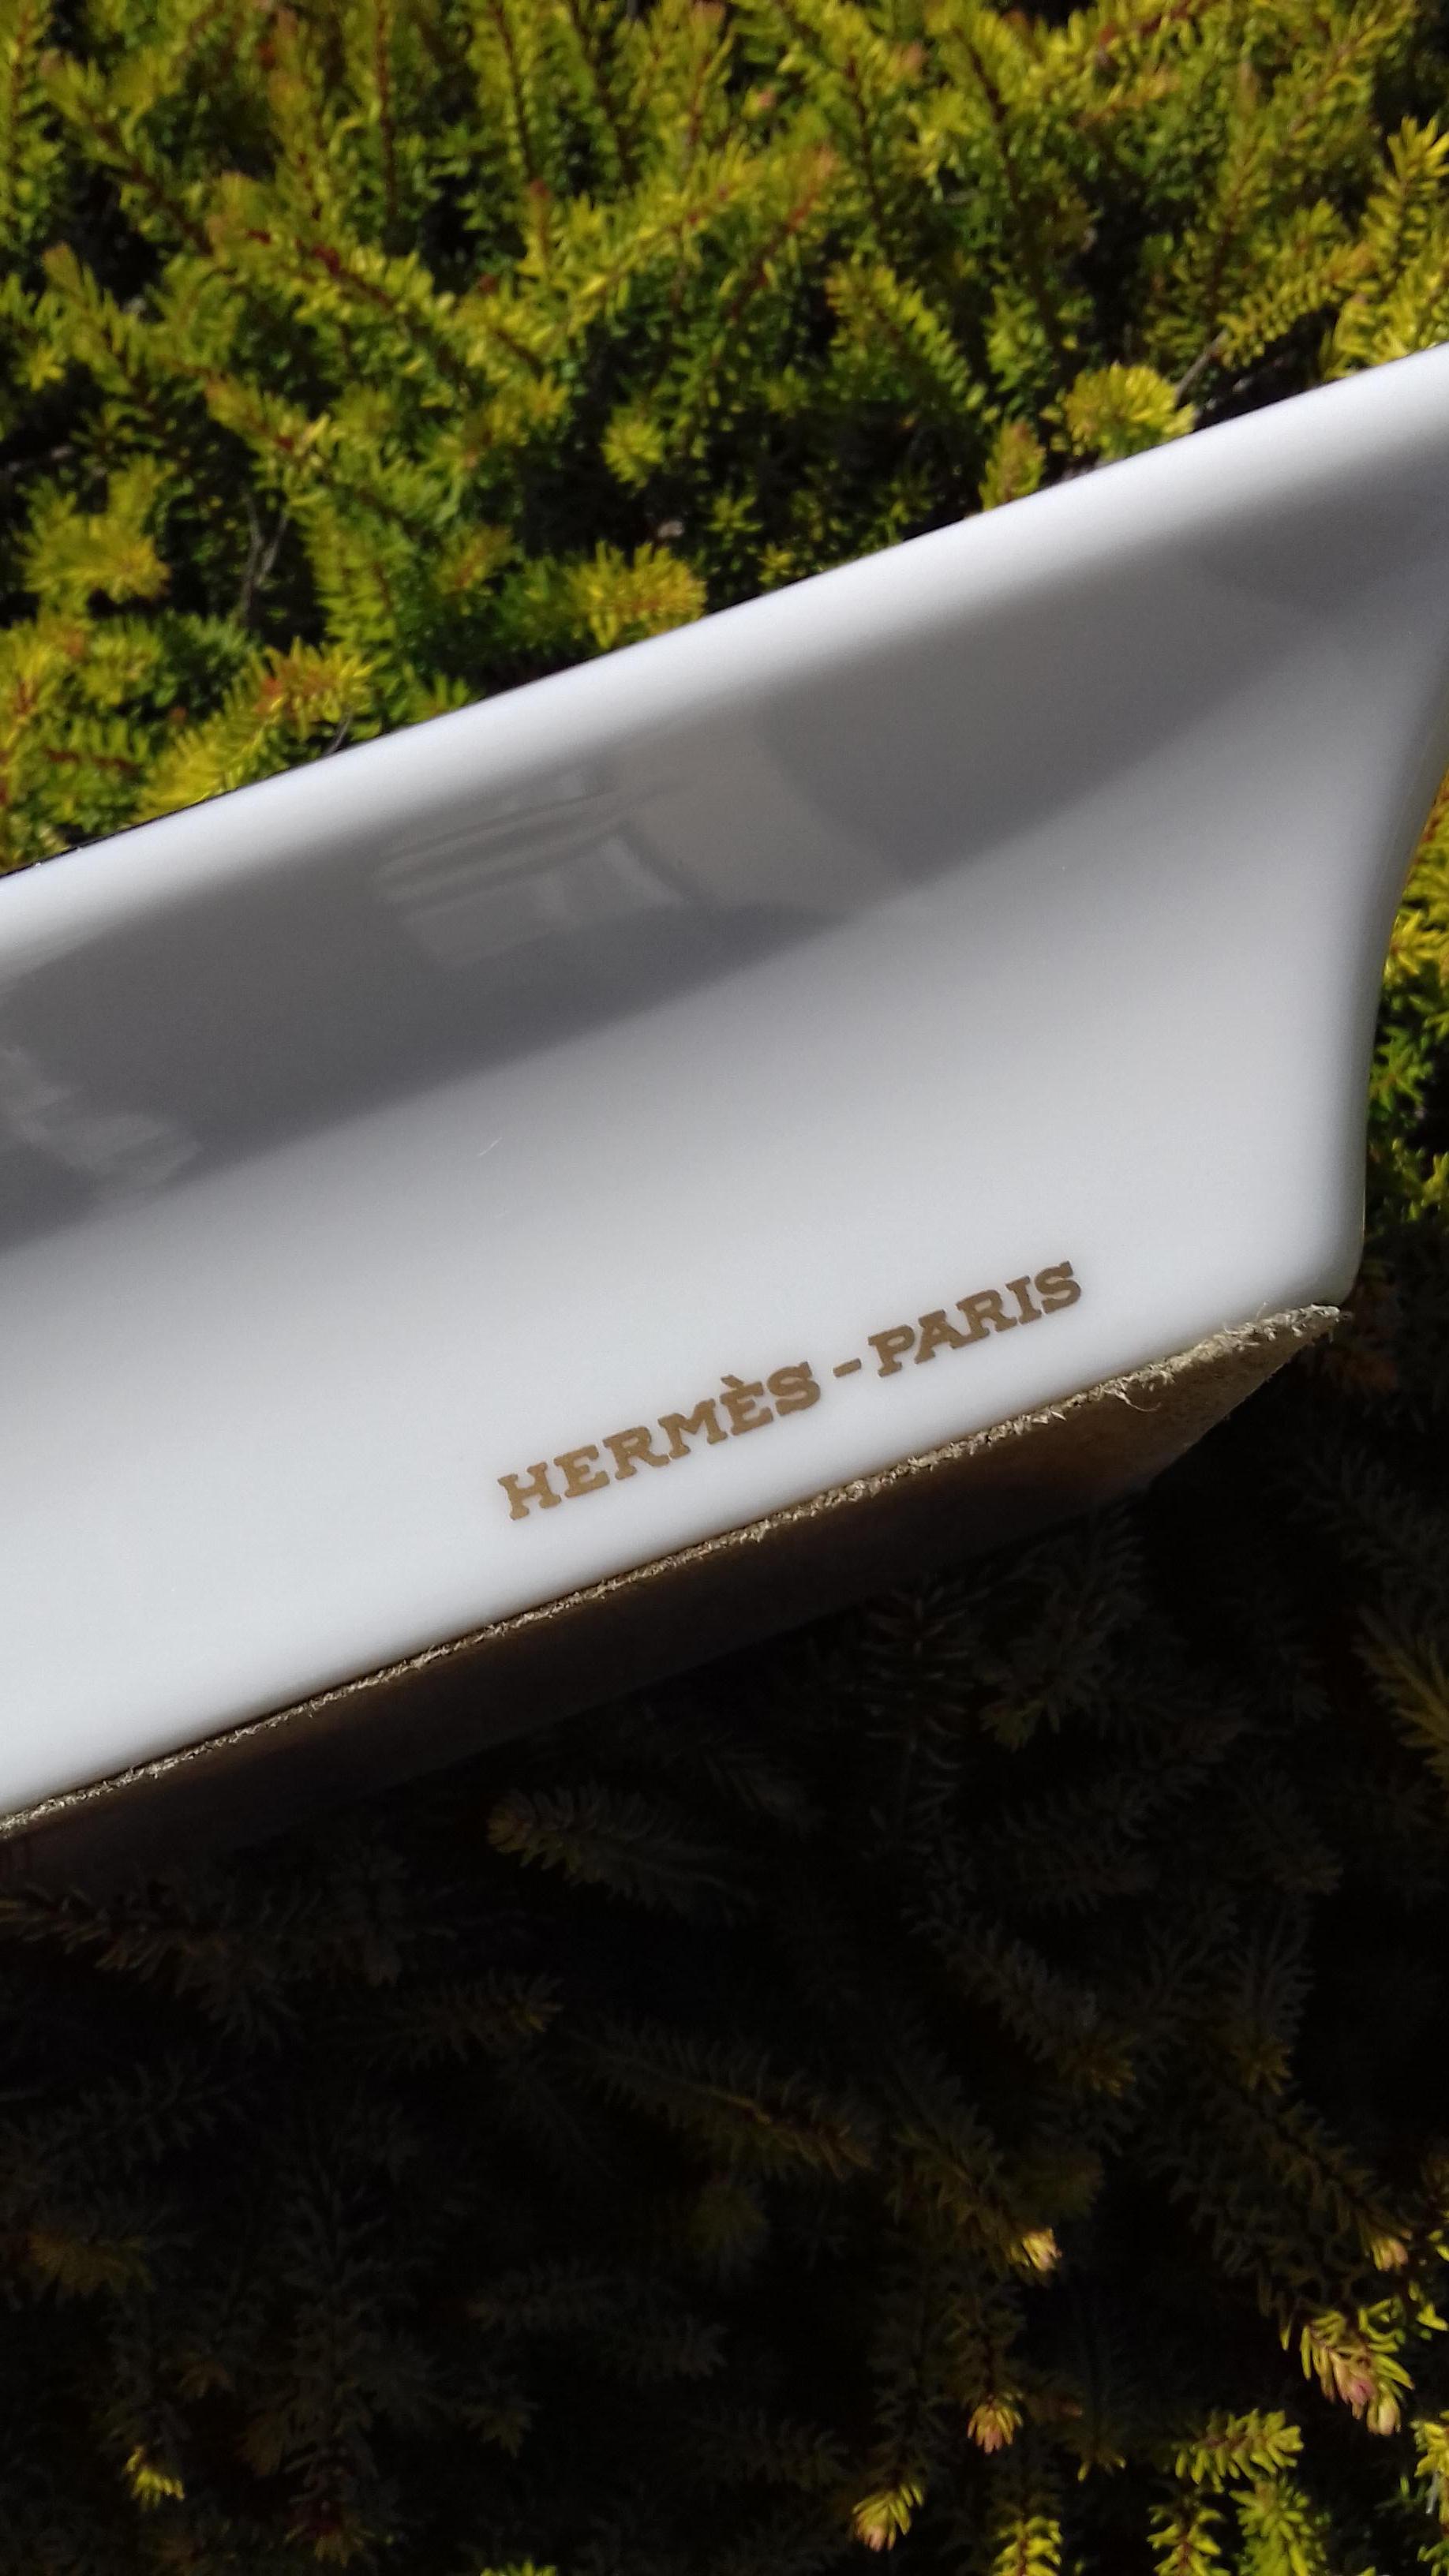 Hermès Printed Porcelain Cigar Ashtray Change Tray Cowboy Hats Rodeo Texas RARE 8